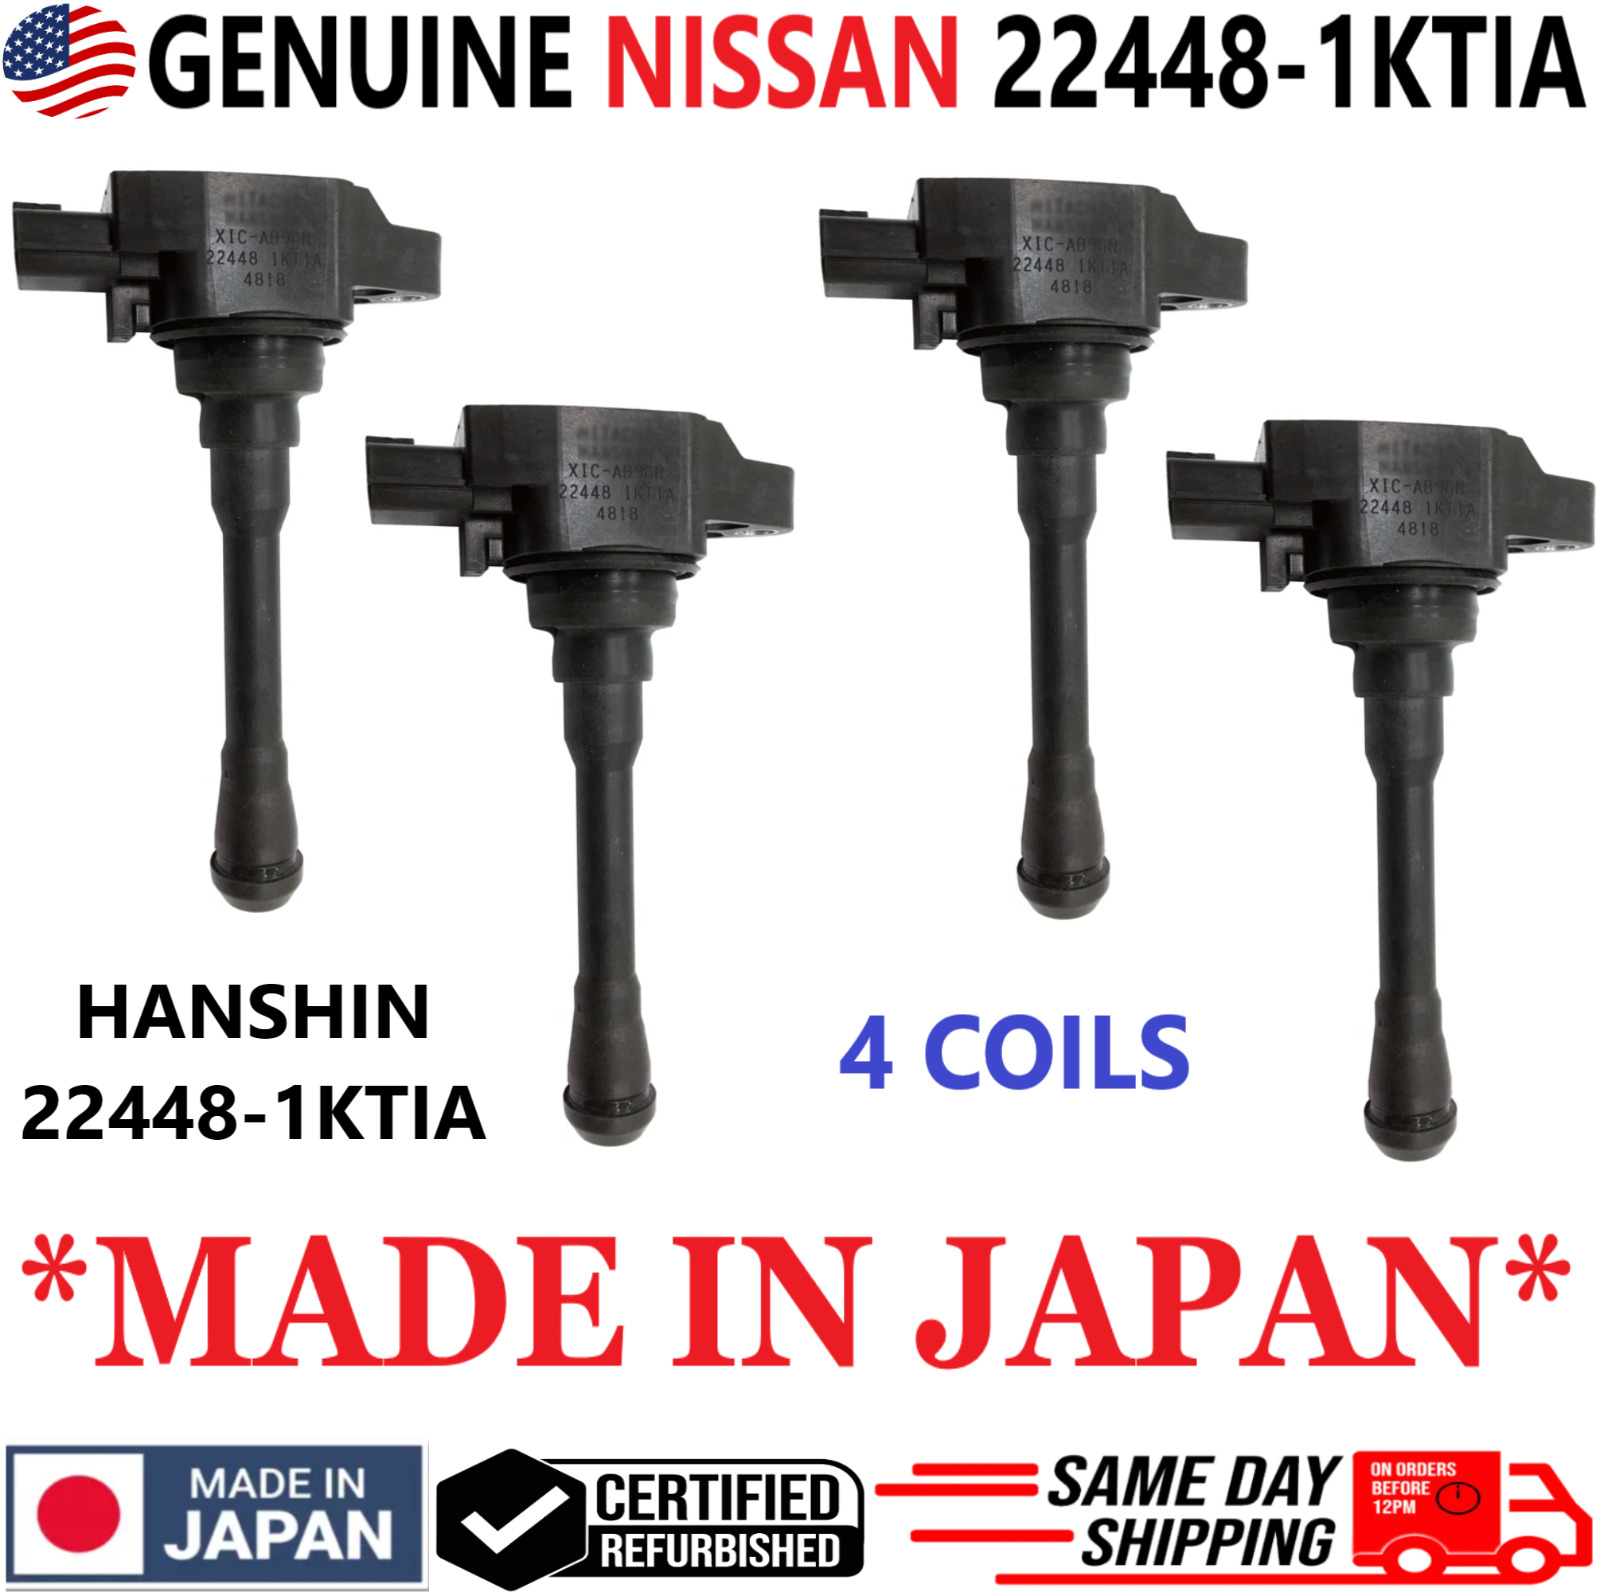 GENUINE Nissan Ignition Coils For 2007-2015 Nissan & Infiniti I4 V8, 22448-1KTIA